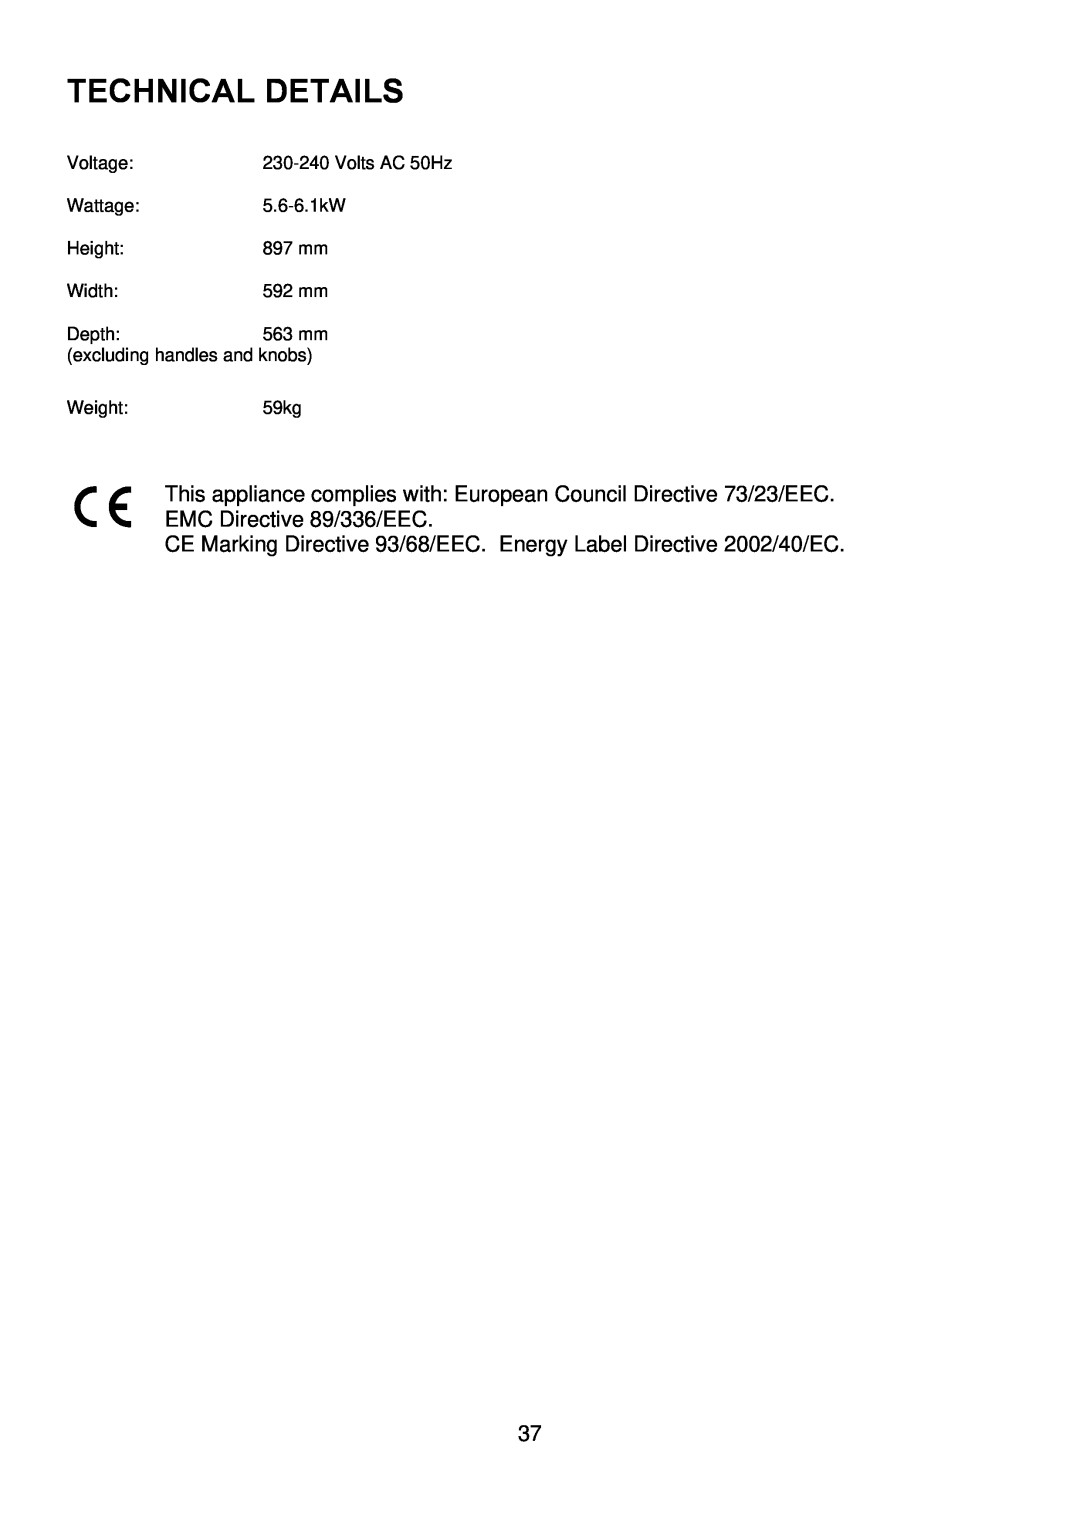 Electrolux D4101-5 manual Technical Details, CE Marking Directive 93/68/EEC. Energy Label Directive 2002/40/EC 